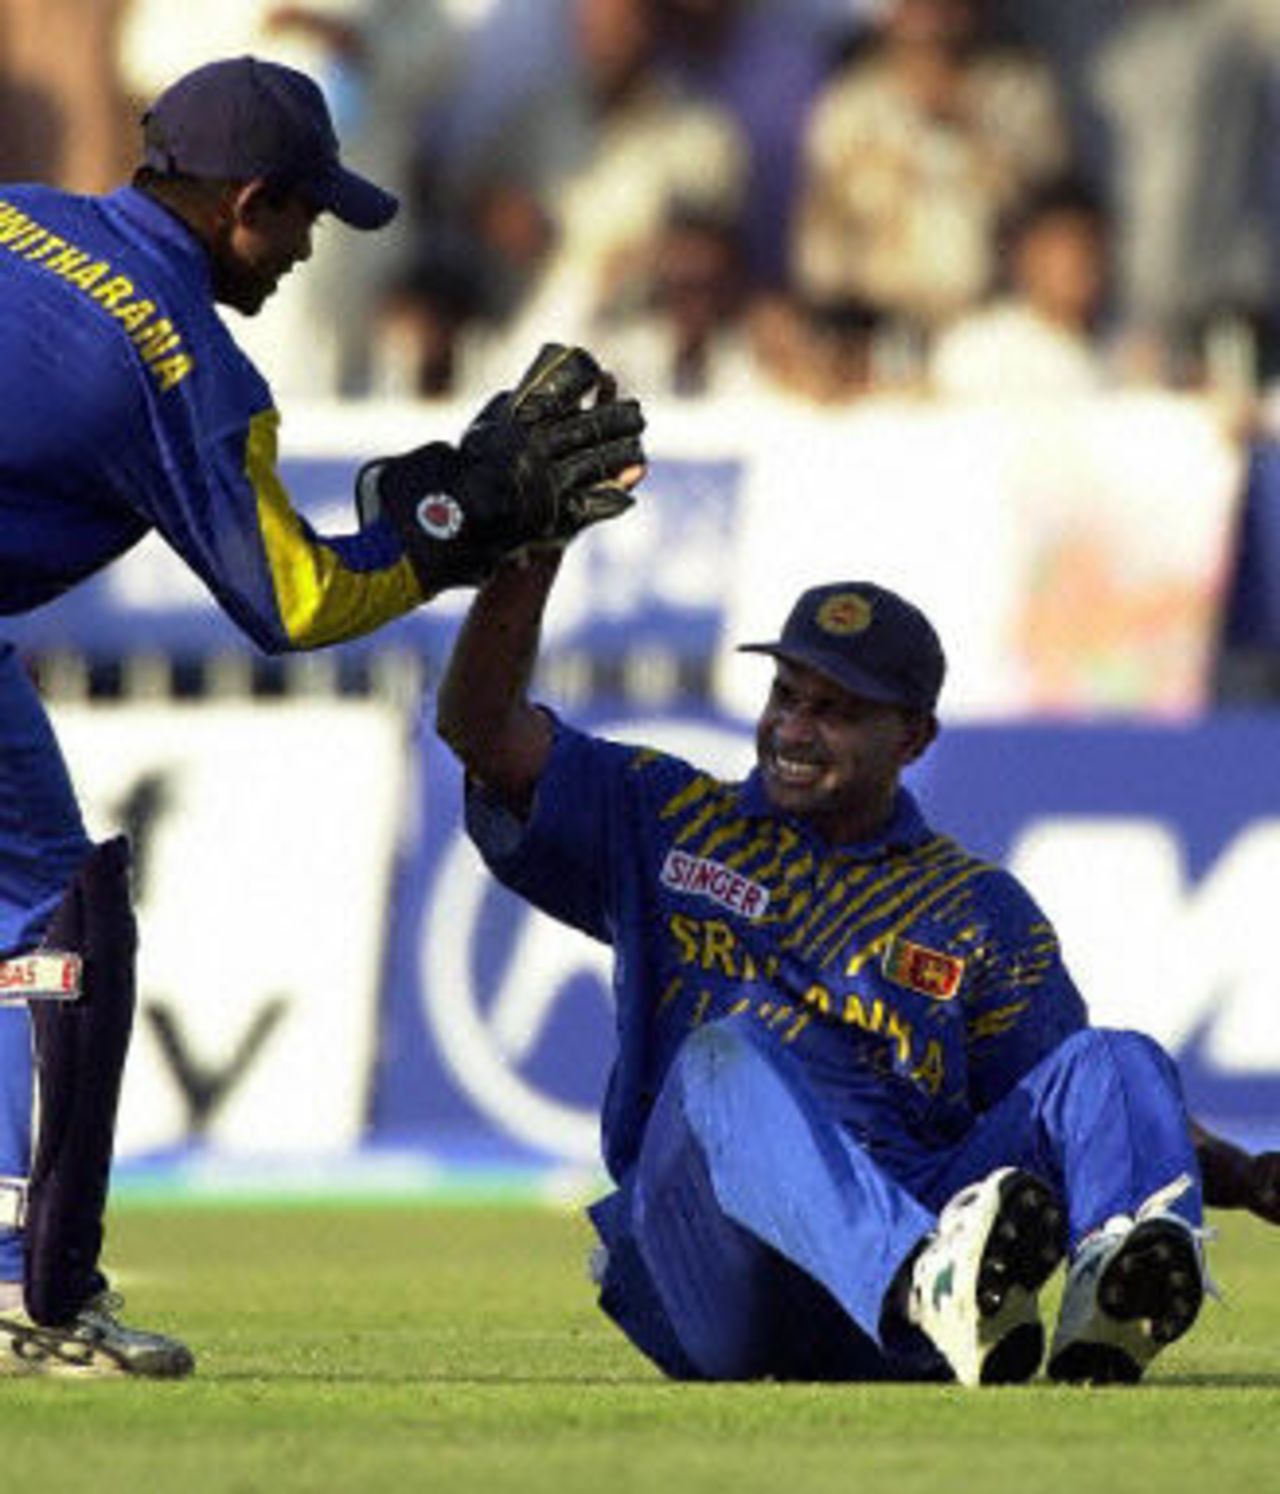 Kaluwitharana greets Jayasuriya on catching Inzamam-ul-Haq, ODI 4 at Sharjah, Pakistan v Sri Lanka, 13 April 2001